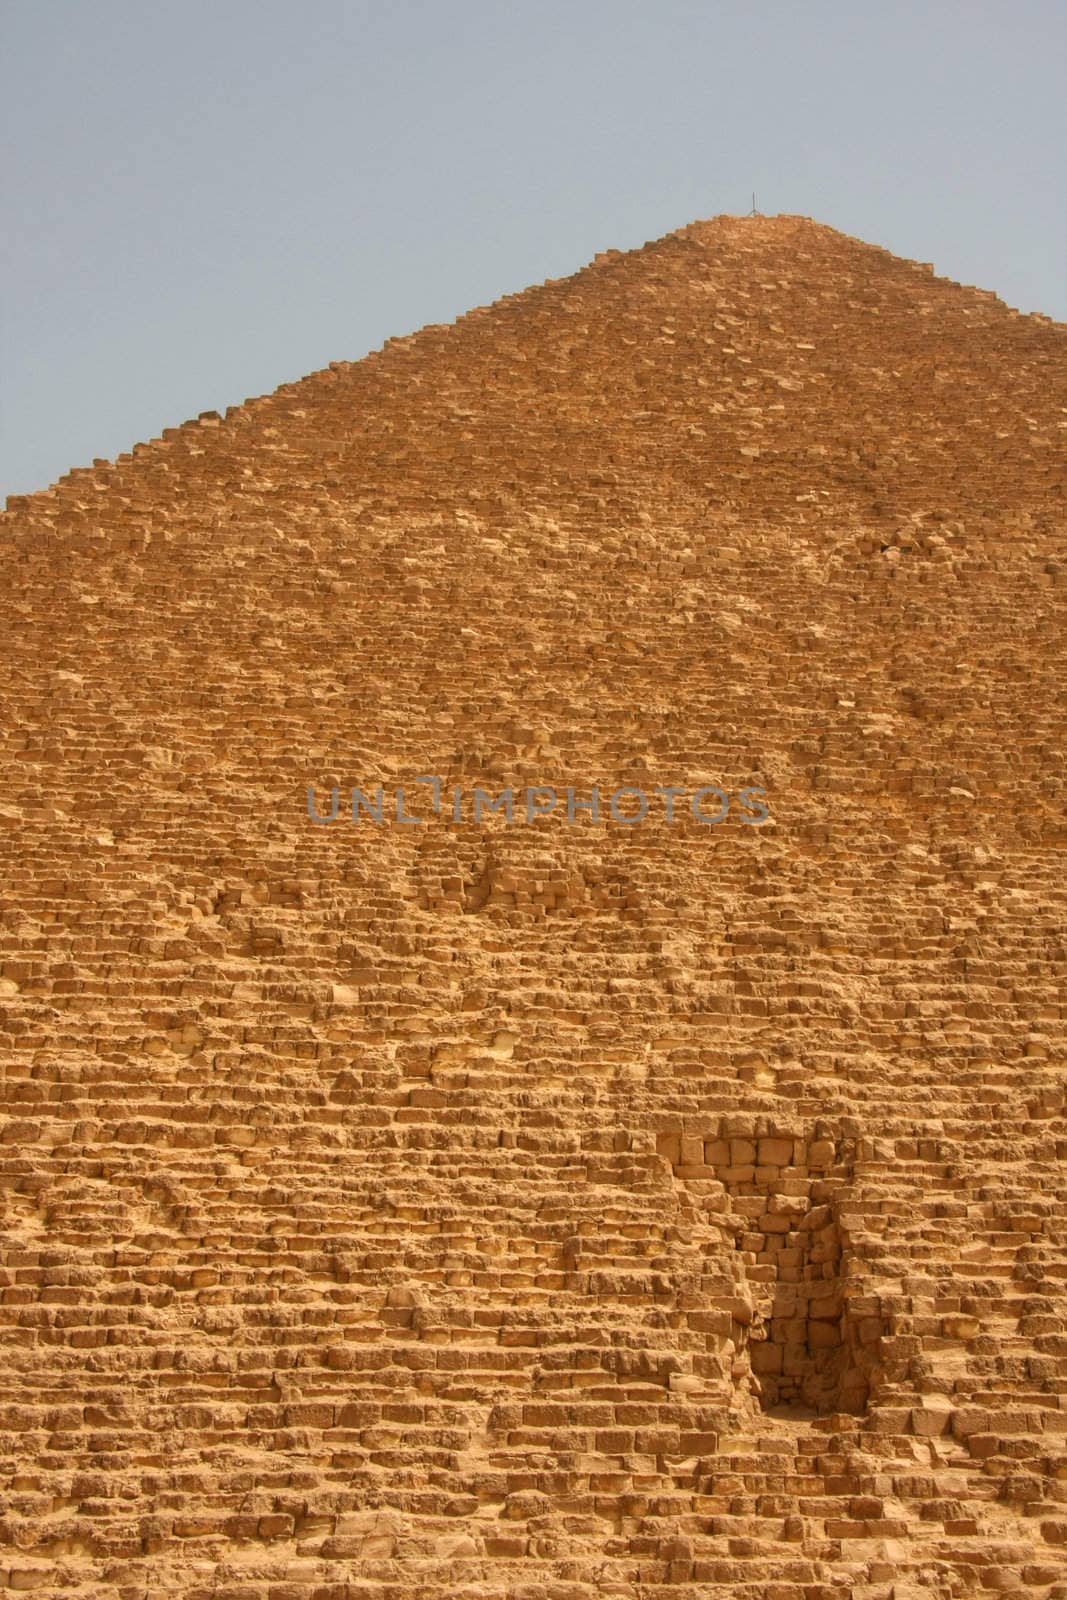 Great Egipt piramids in day light.